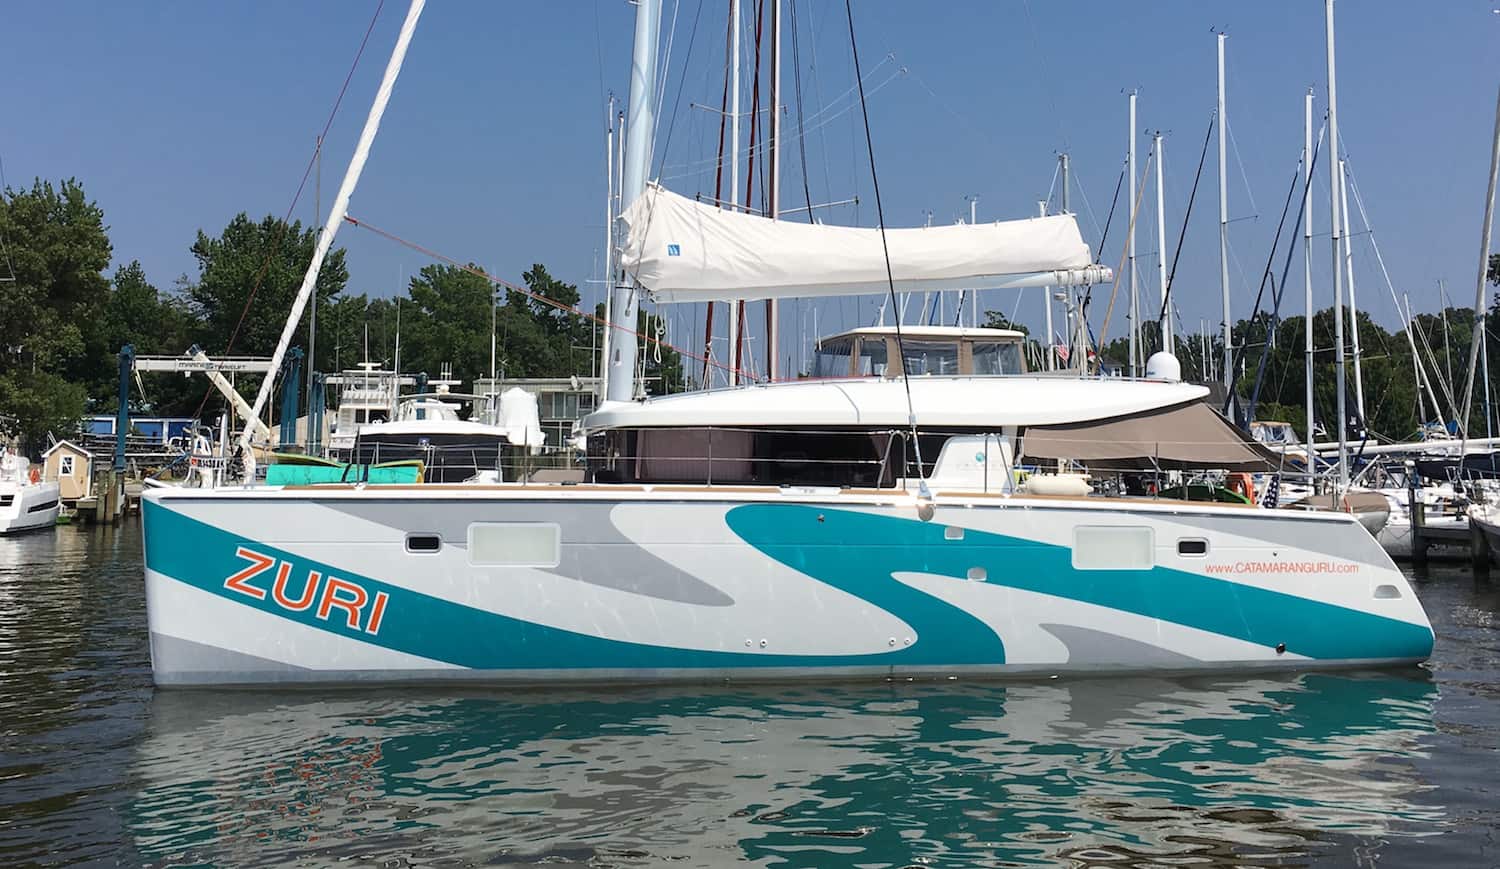 Zuri Lagoon 450s will be at the annapolis sailboat show